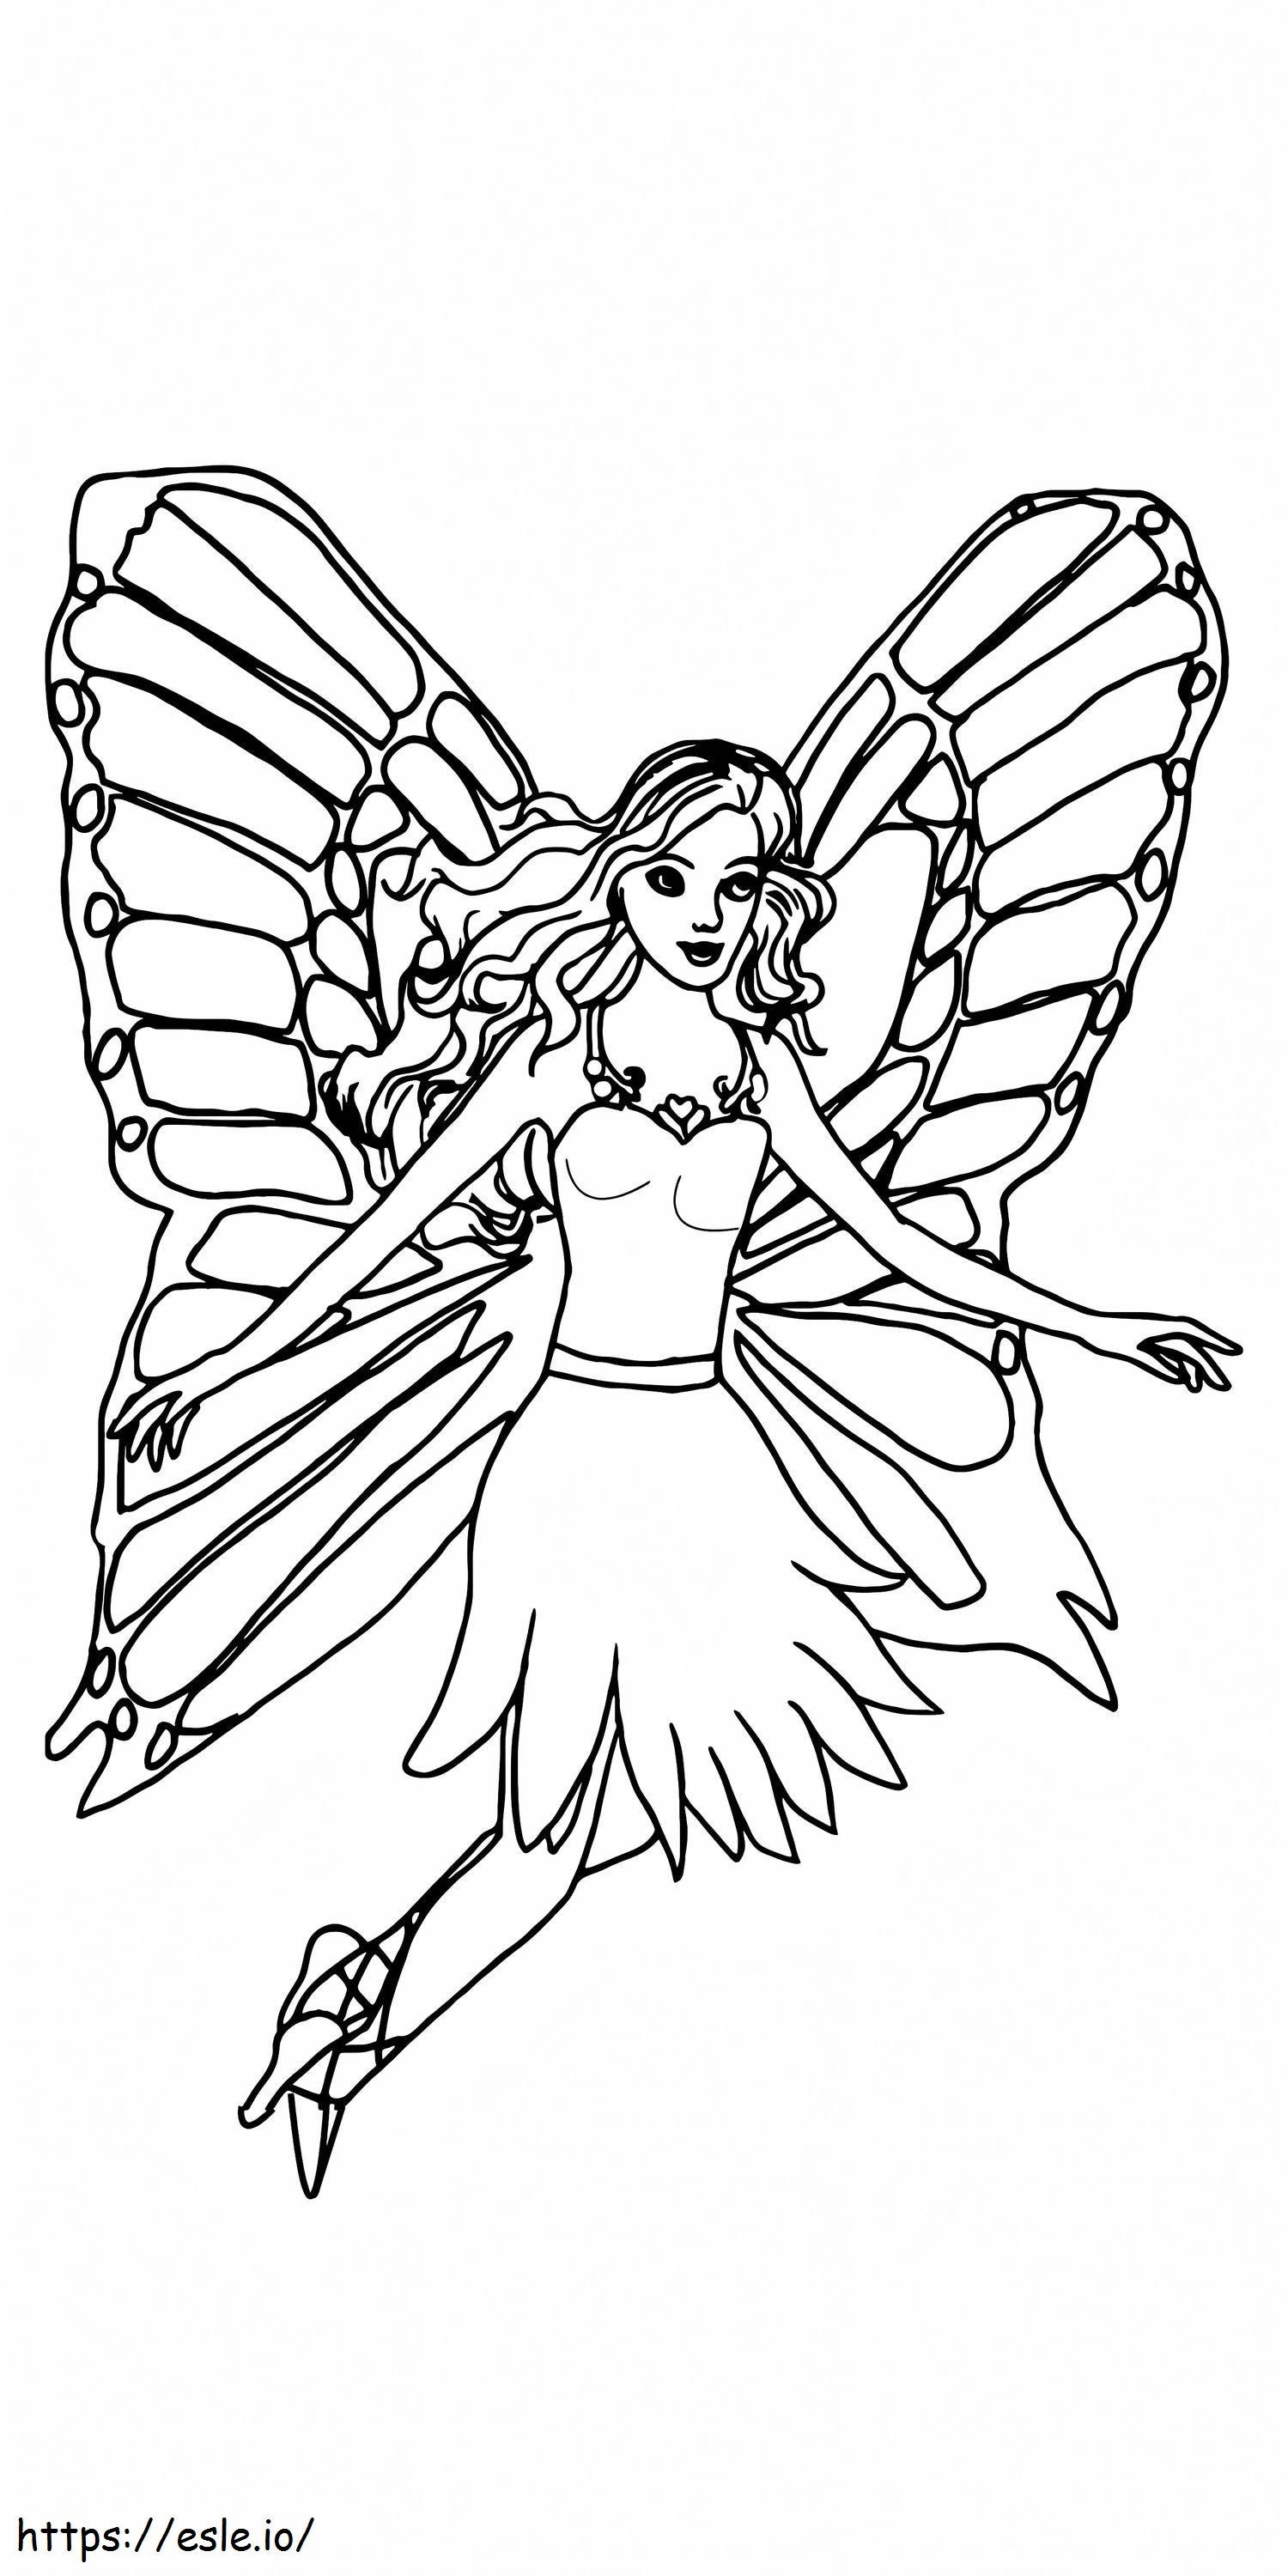 Fairy Princess Printable 3 coloring page